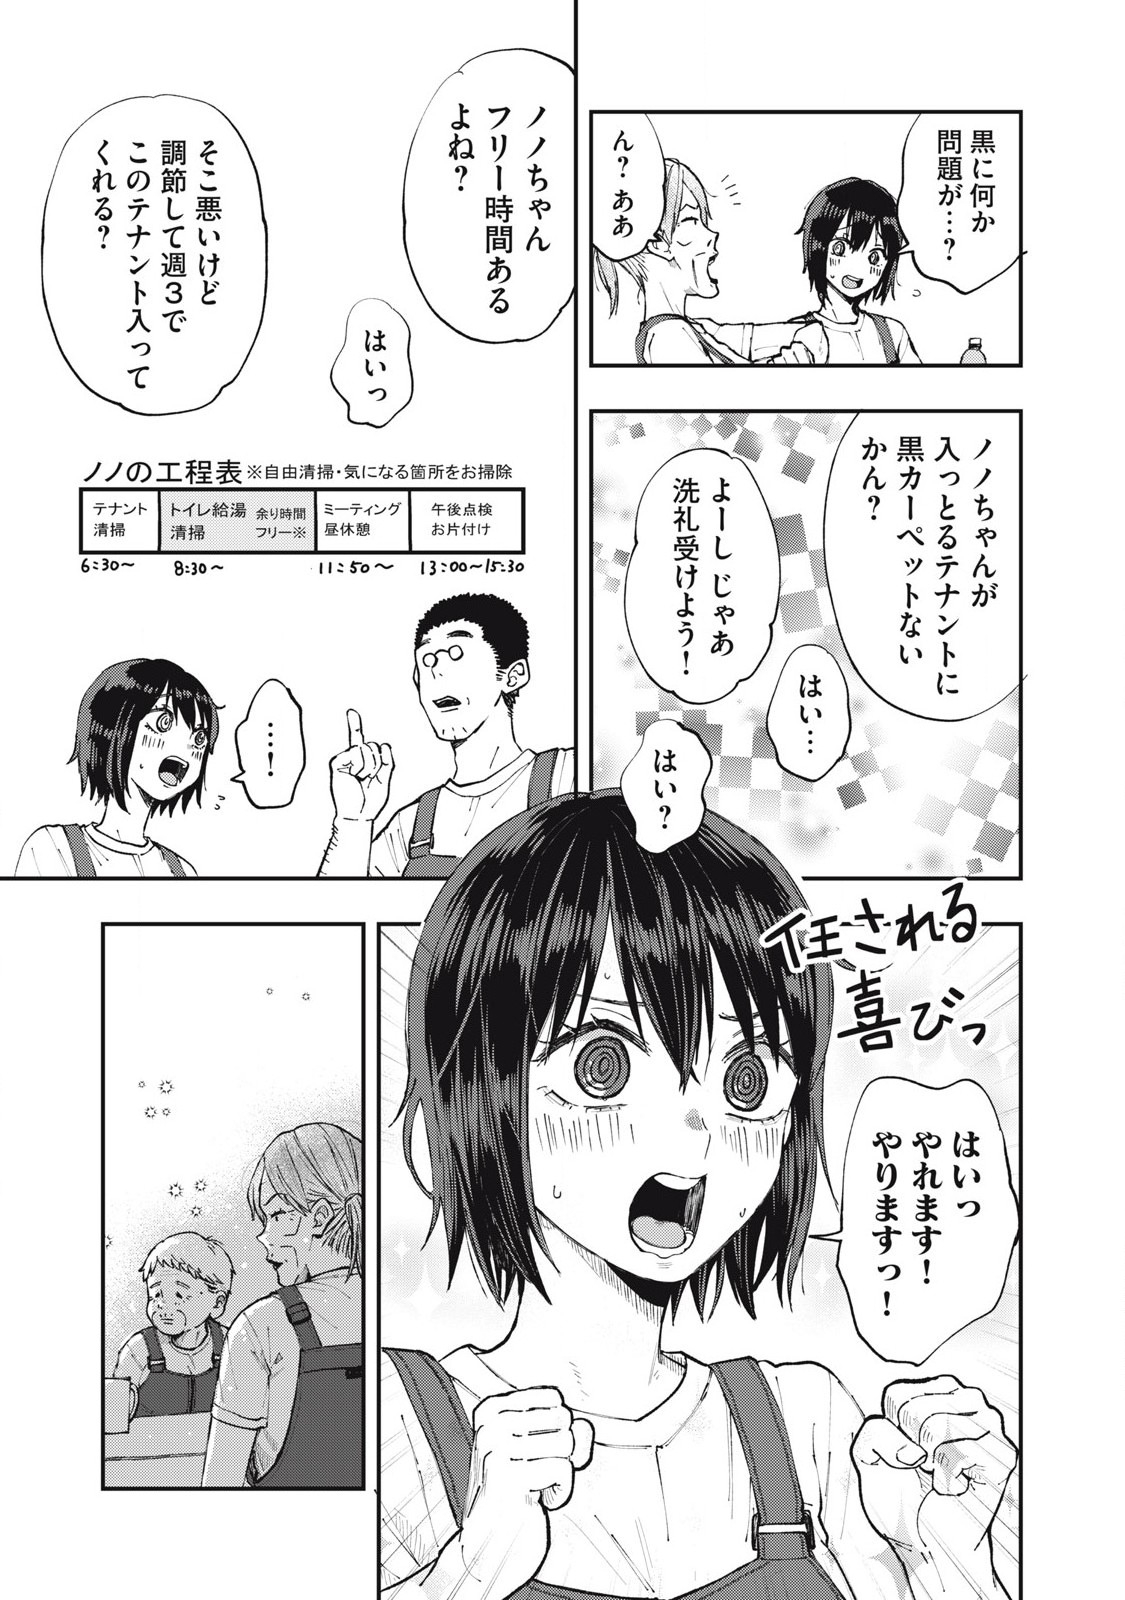 Seisouin Nono-chan Kyou no Tsubuyaki - Chapter 4 - Page 5